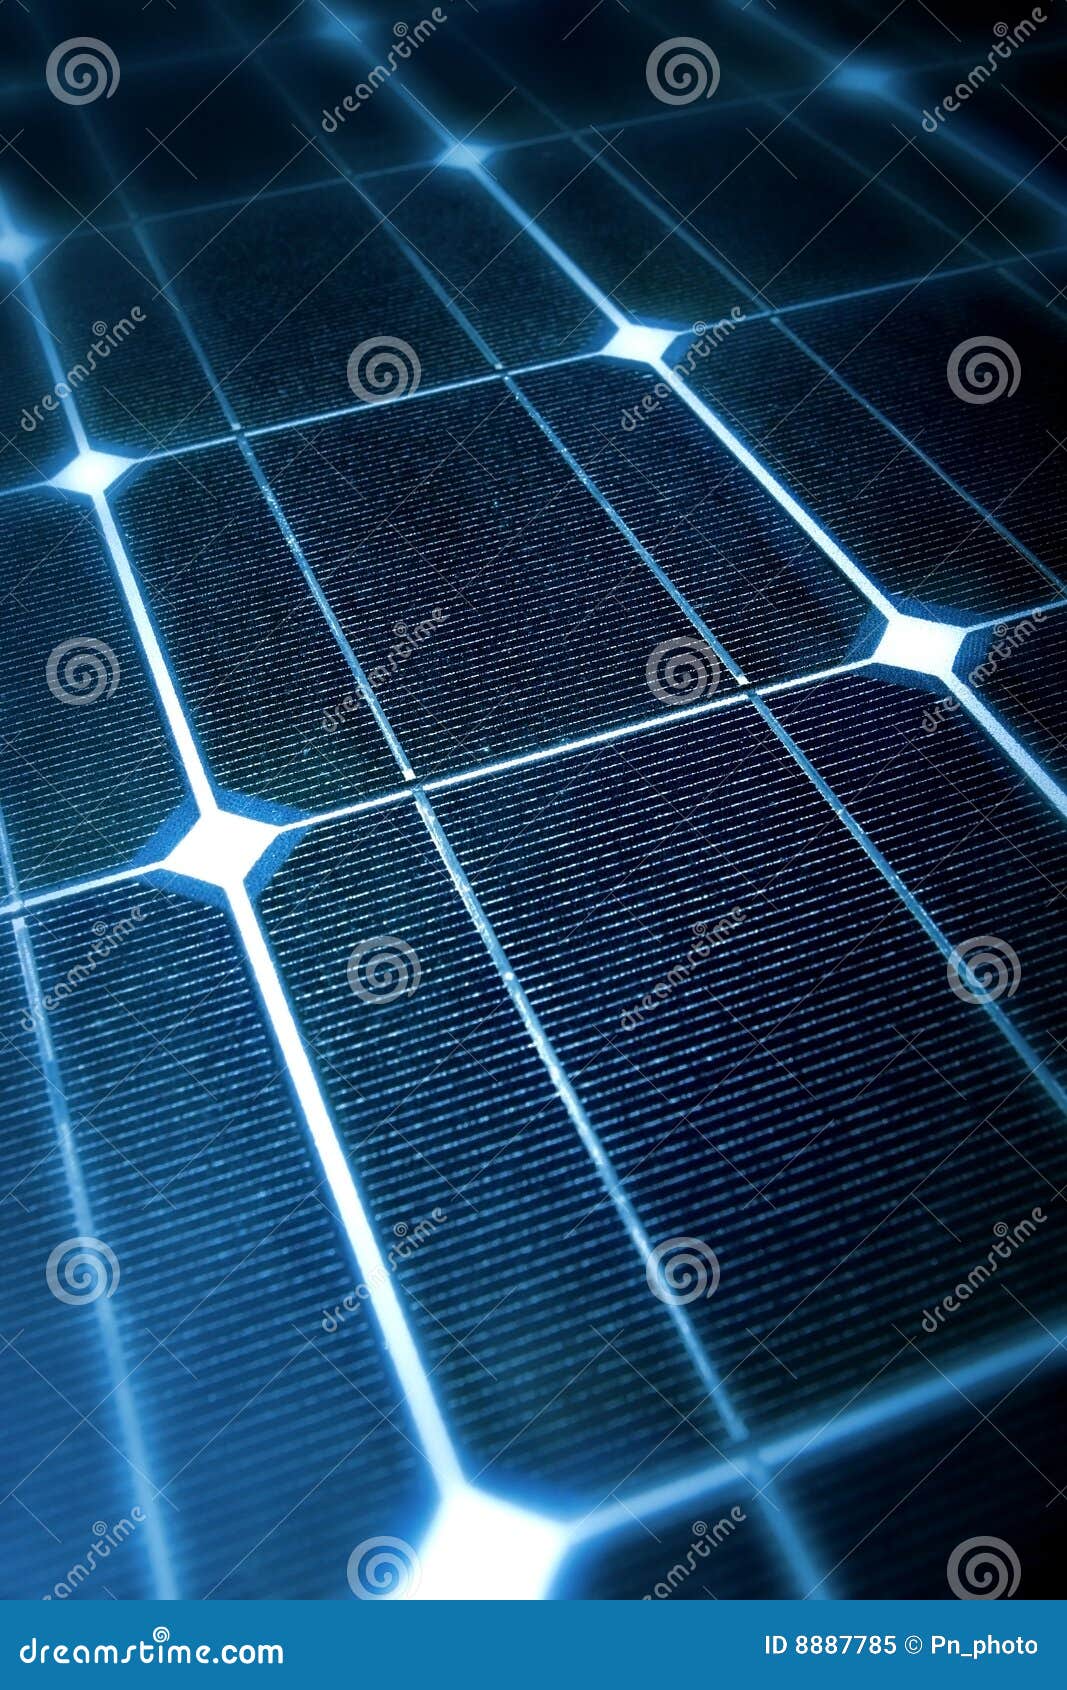 modern solar panel